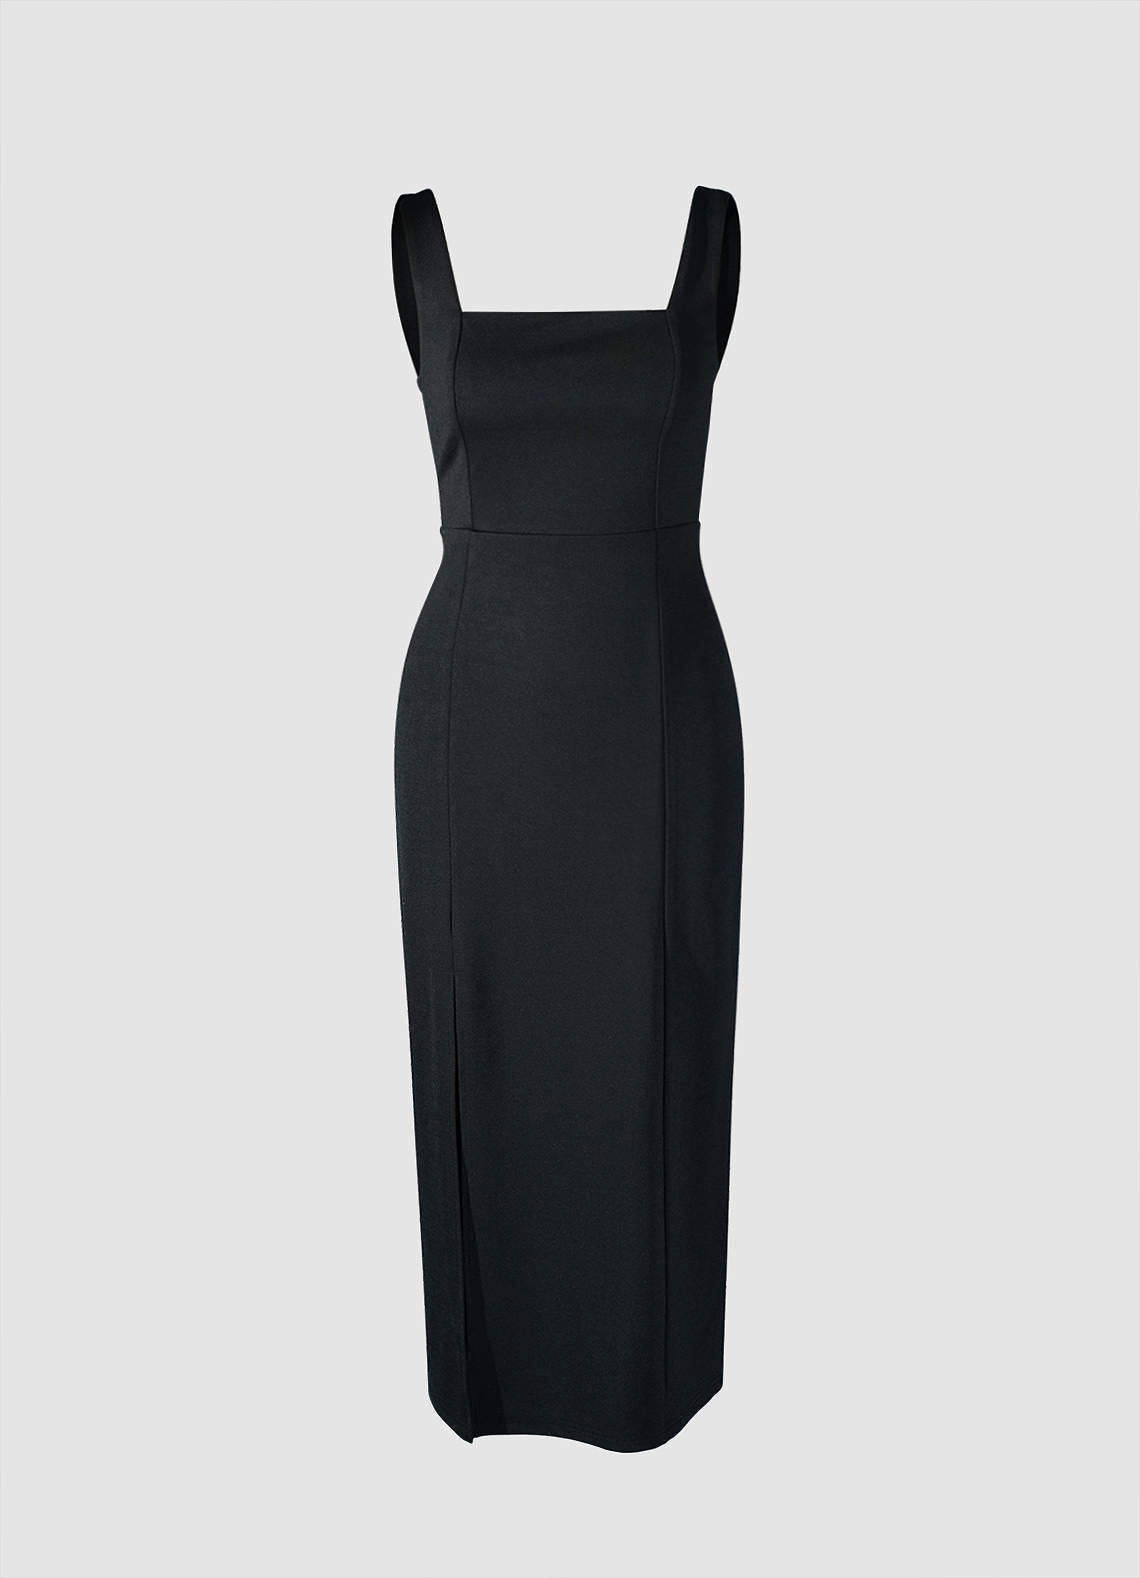 Sight To See Black Bodycon Midi Dress image1